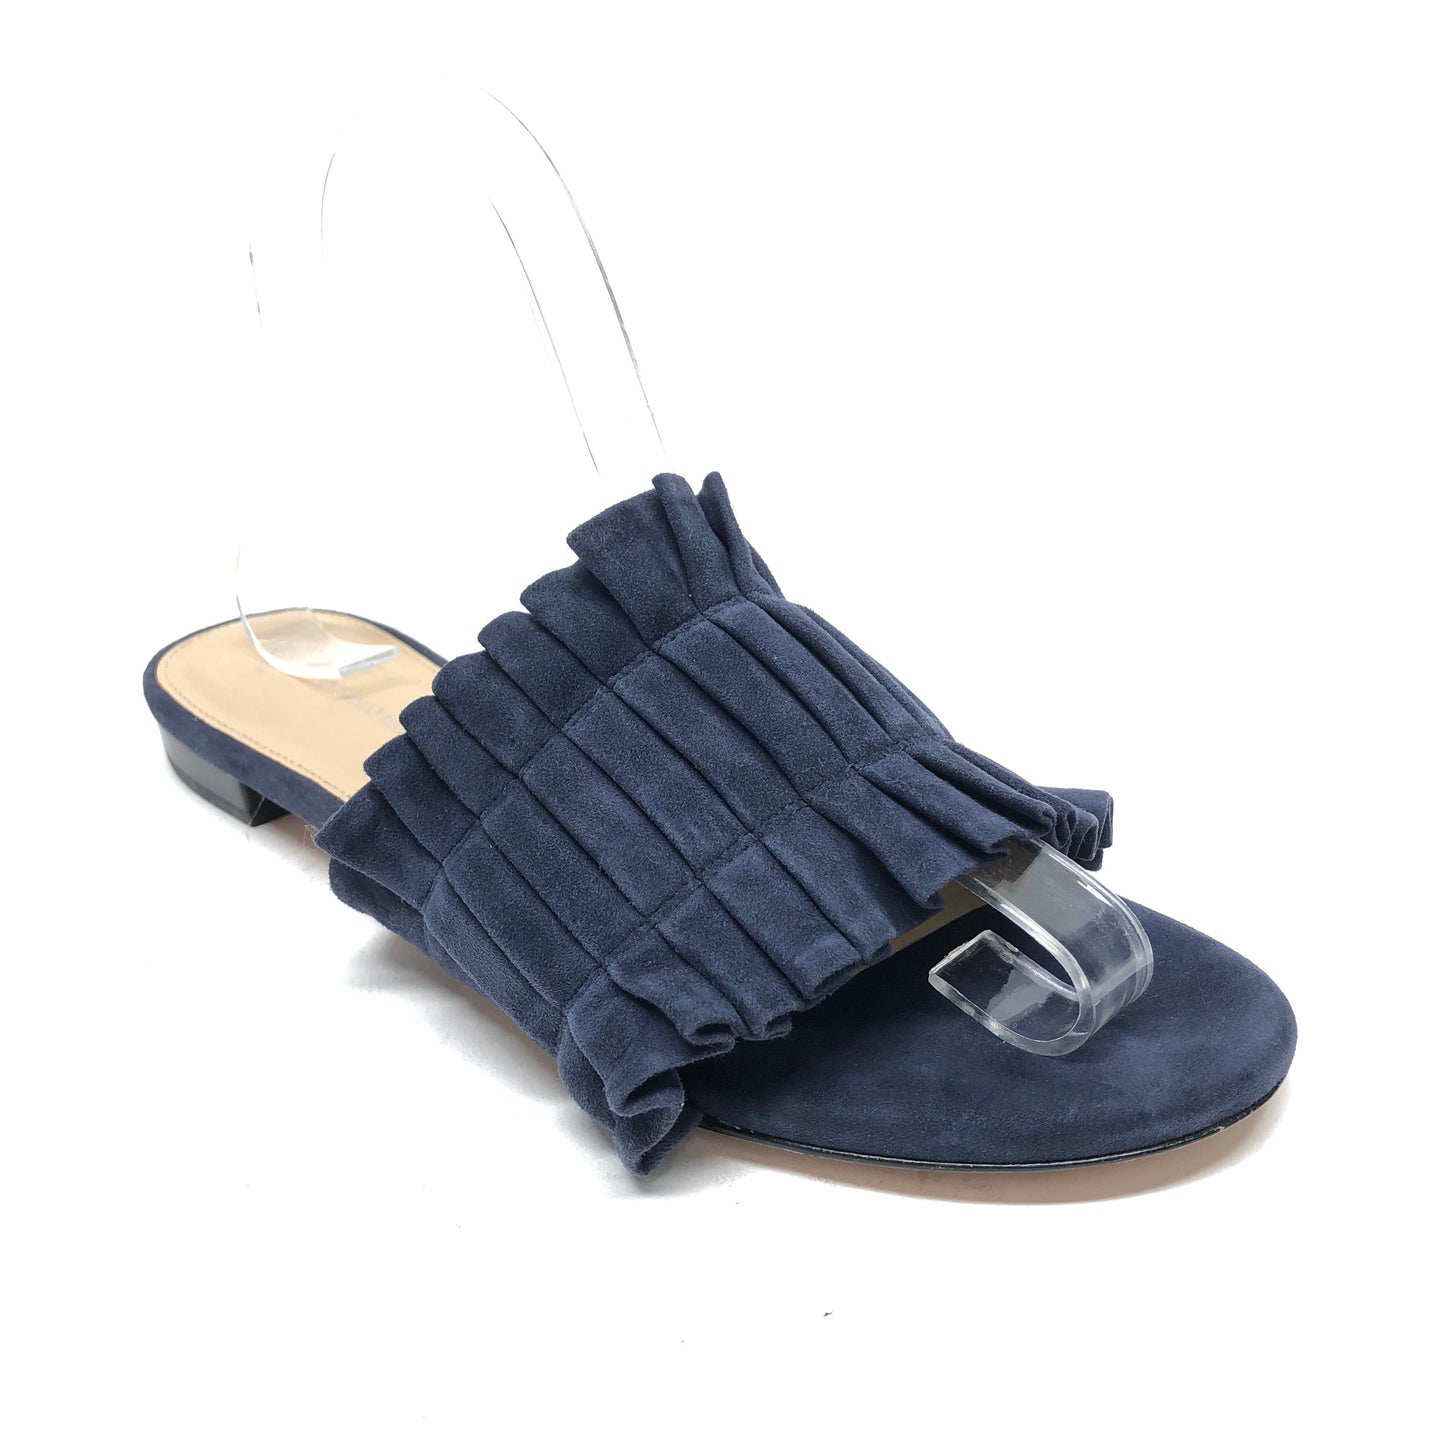 Sandals Flats By Antonio Melani  Size: 8.5